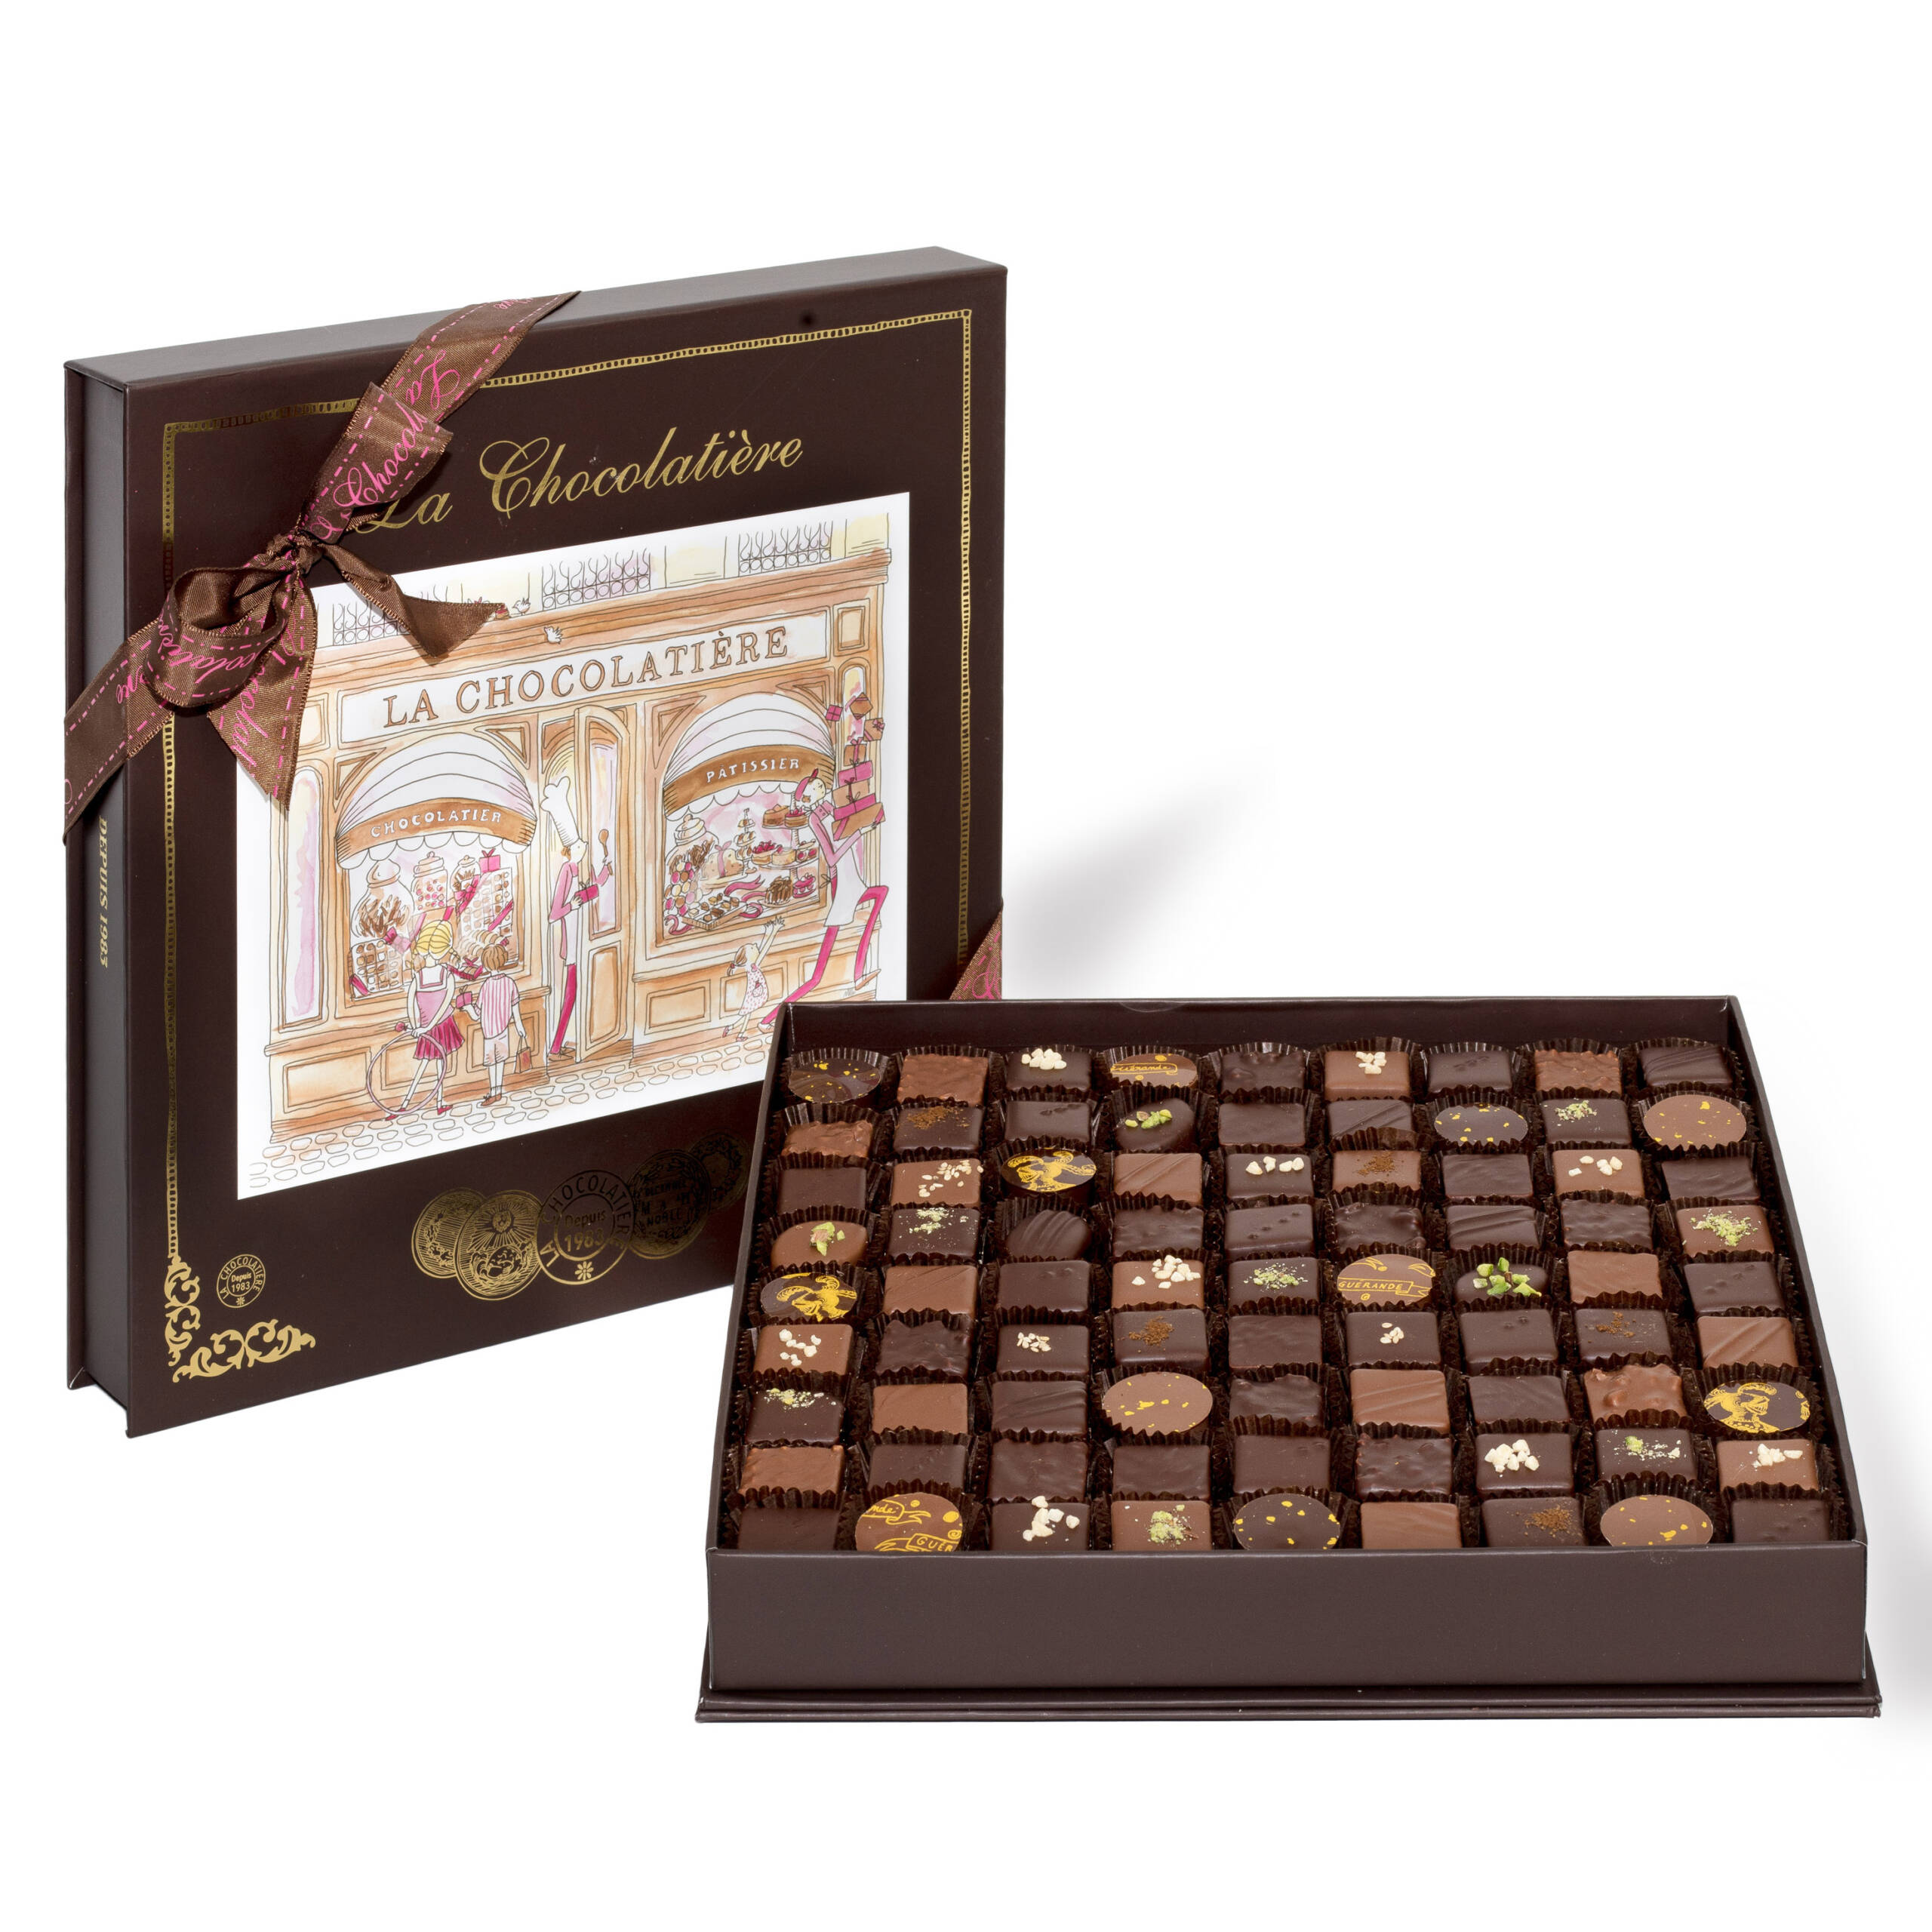 Coffret cadeau Chocolat - chocolatier annecy